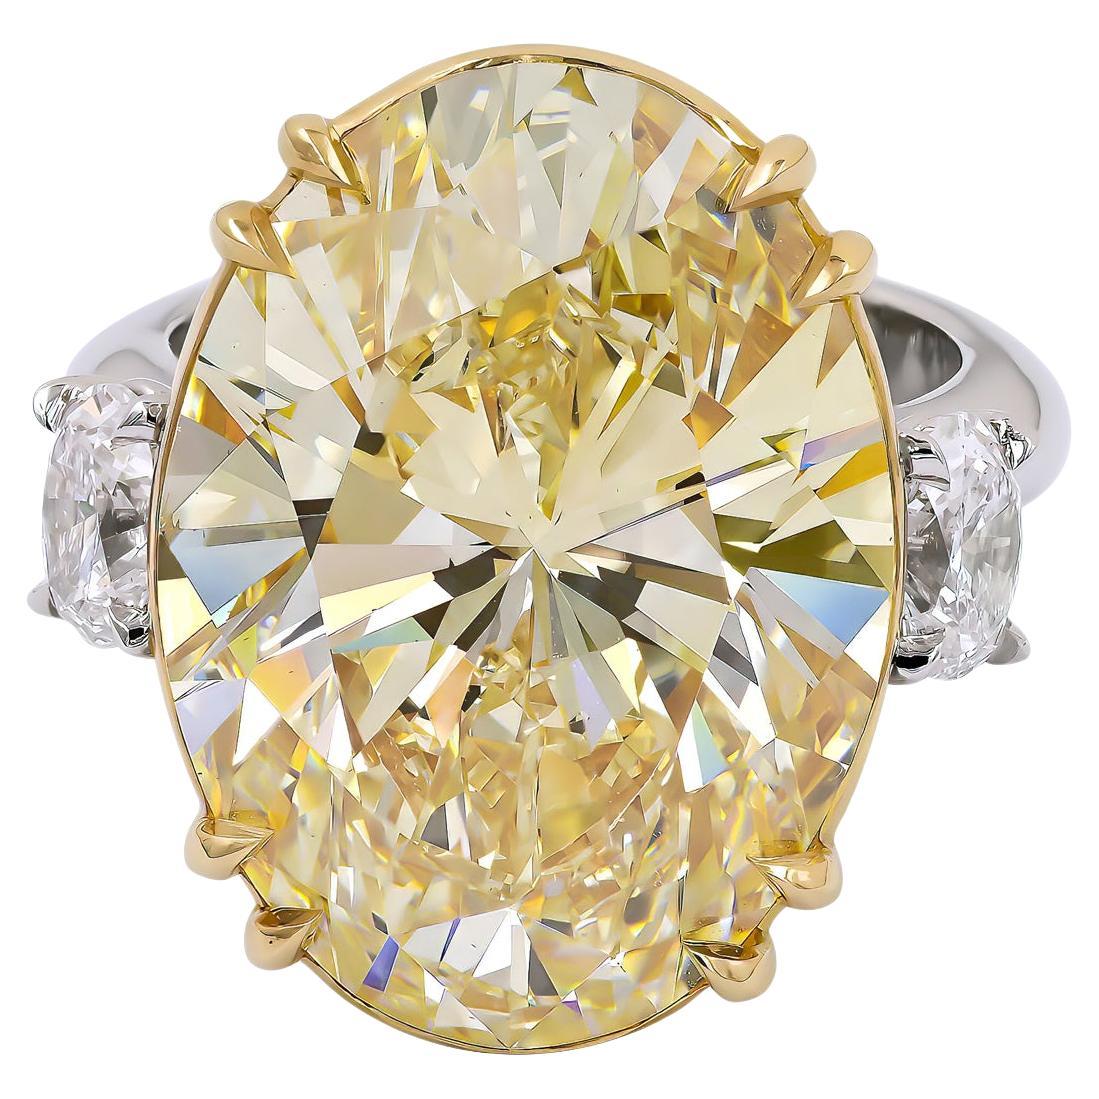 Spectra Fine Jewelry 20.17 Carat GIA Certified Fancy Light Yellow Diamond Ring For Sale